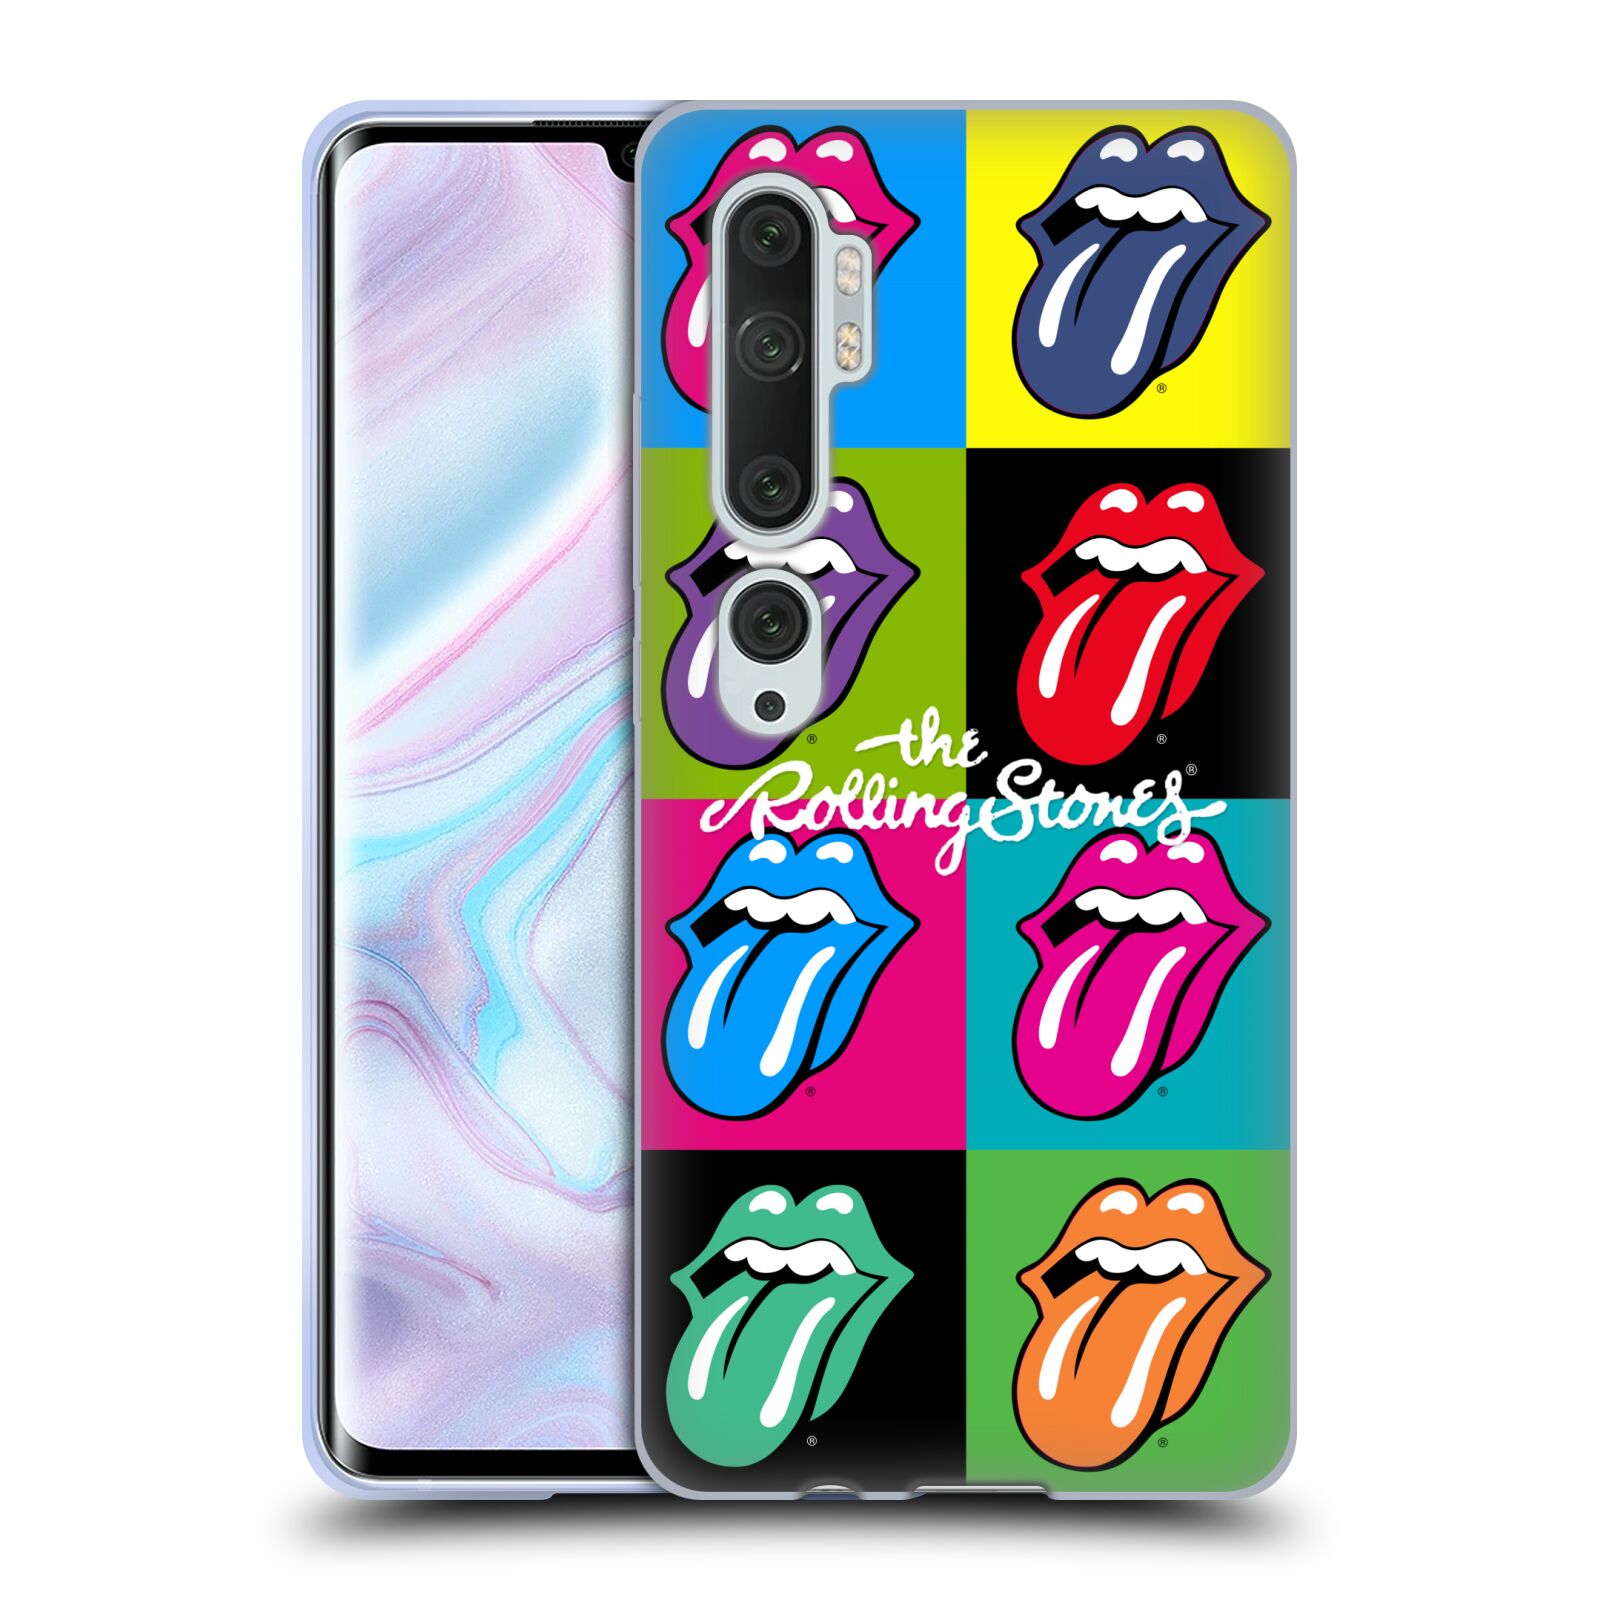 Silikonové pouzdro na mobil Xiaomi Mi Note 10 / 10 Pro - Head Case - The Rolling Stones - Pop Art Vyplazené Jazyky